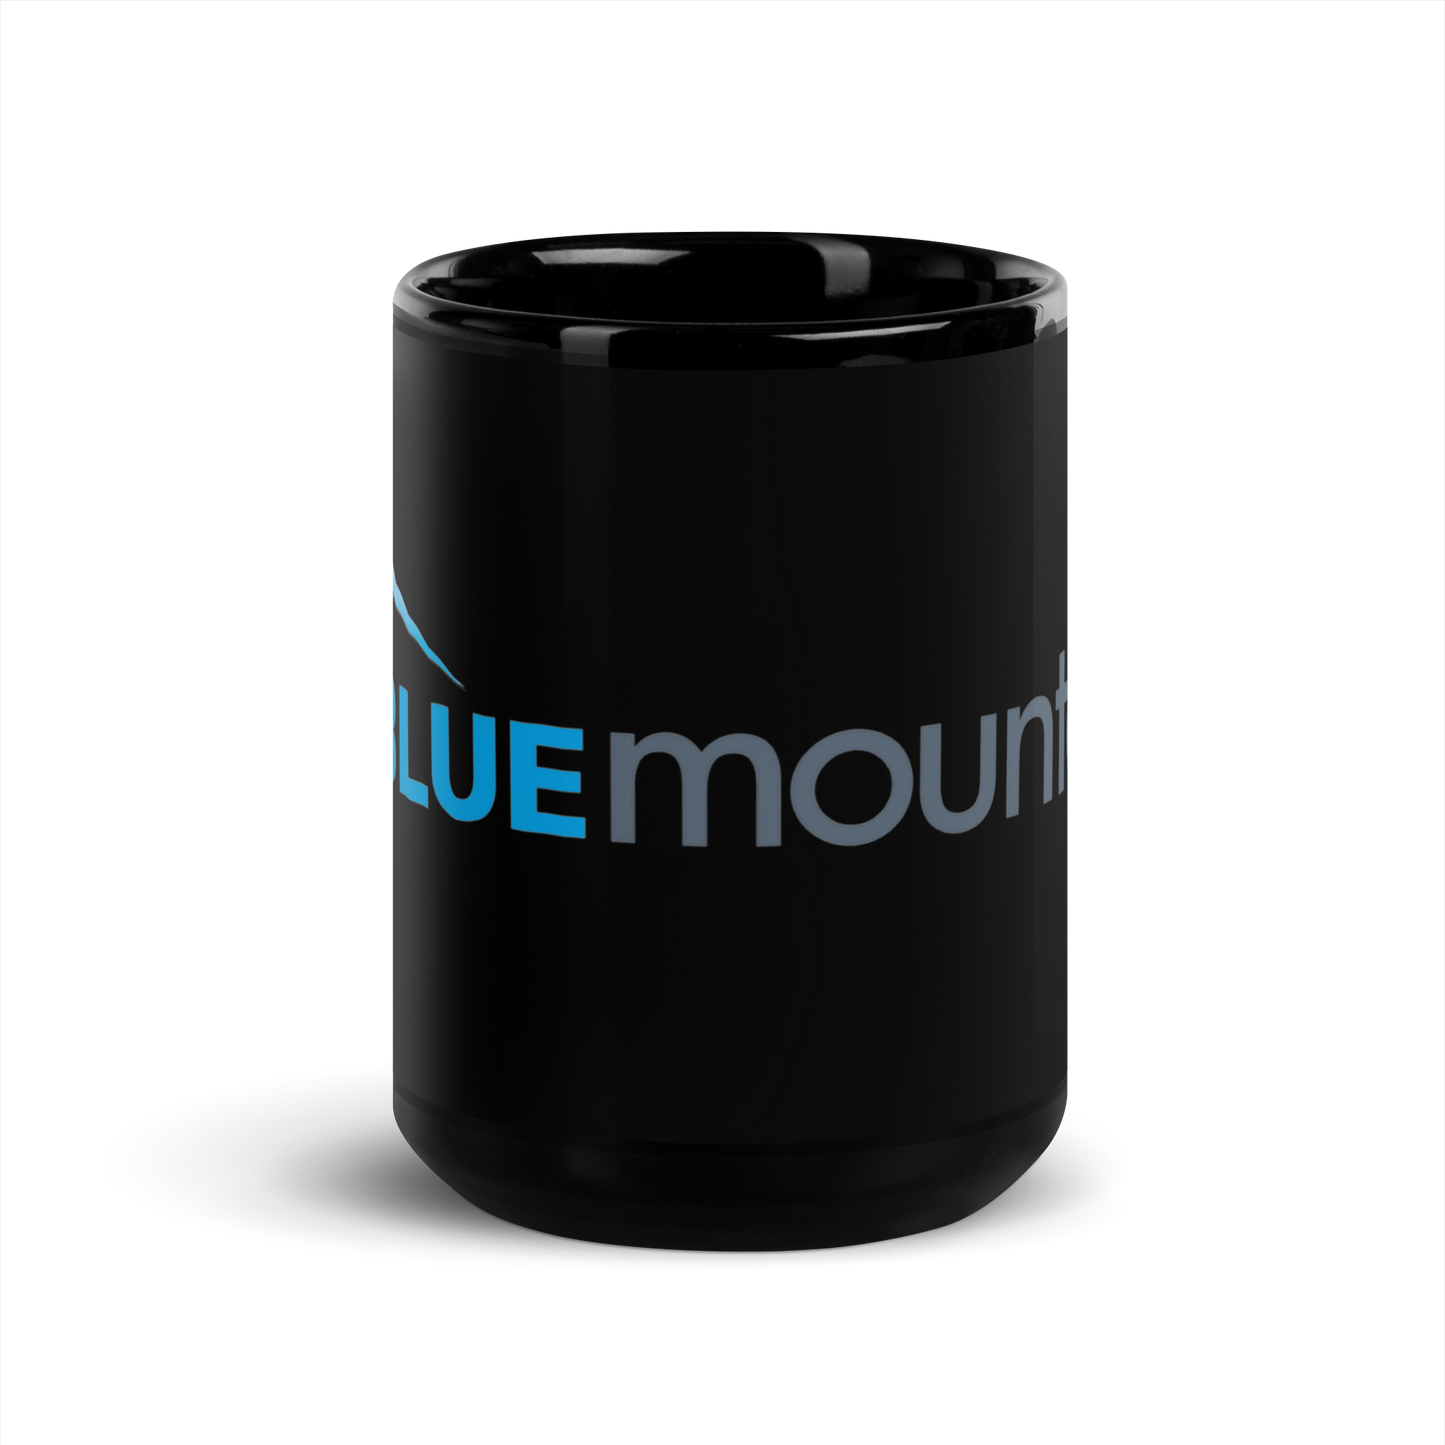 Blue Mountain Mug